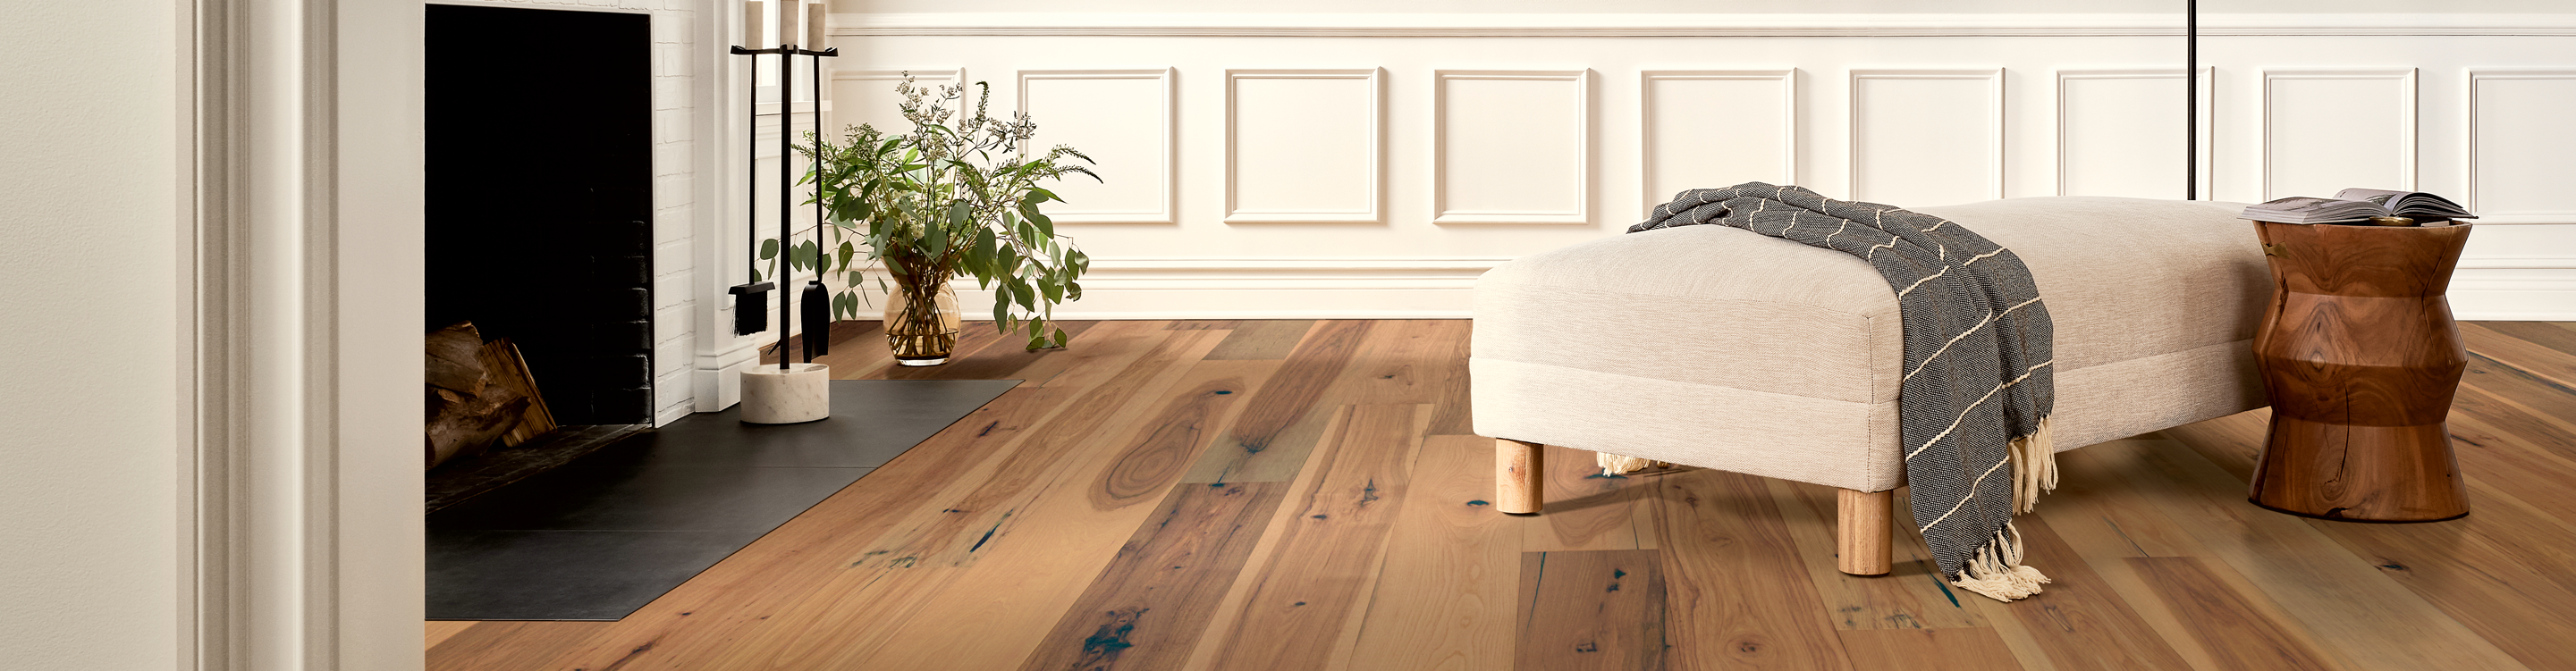 Oak hardwood floor with cream ottoman 